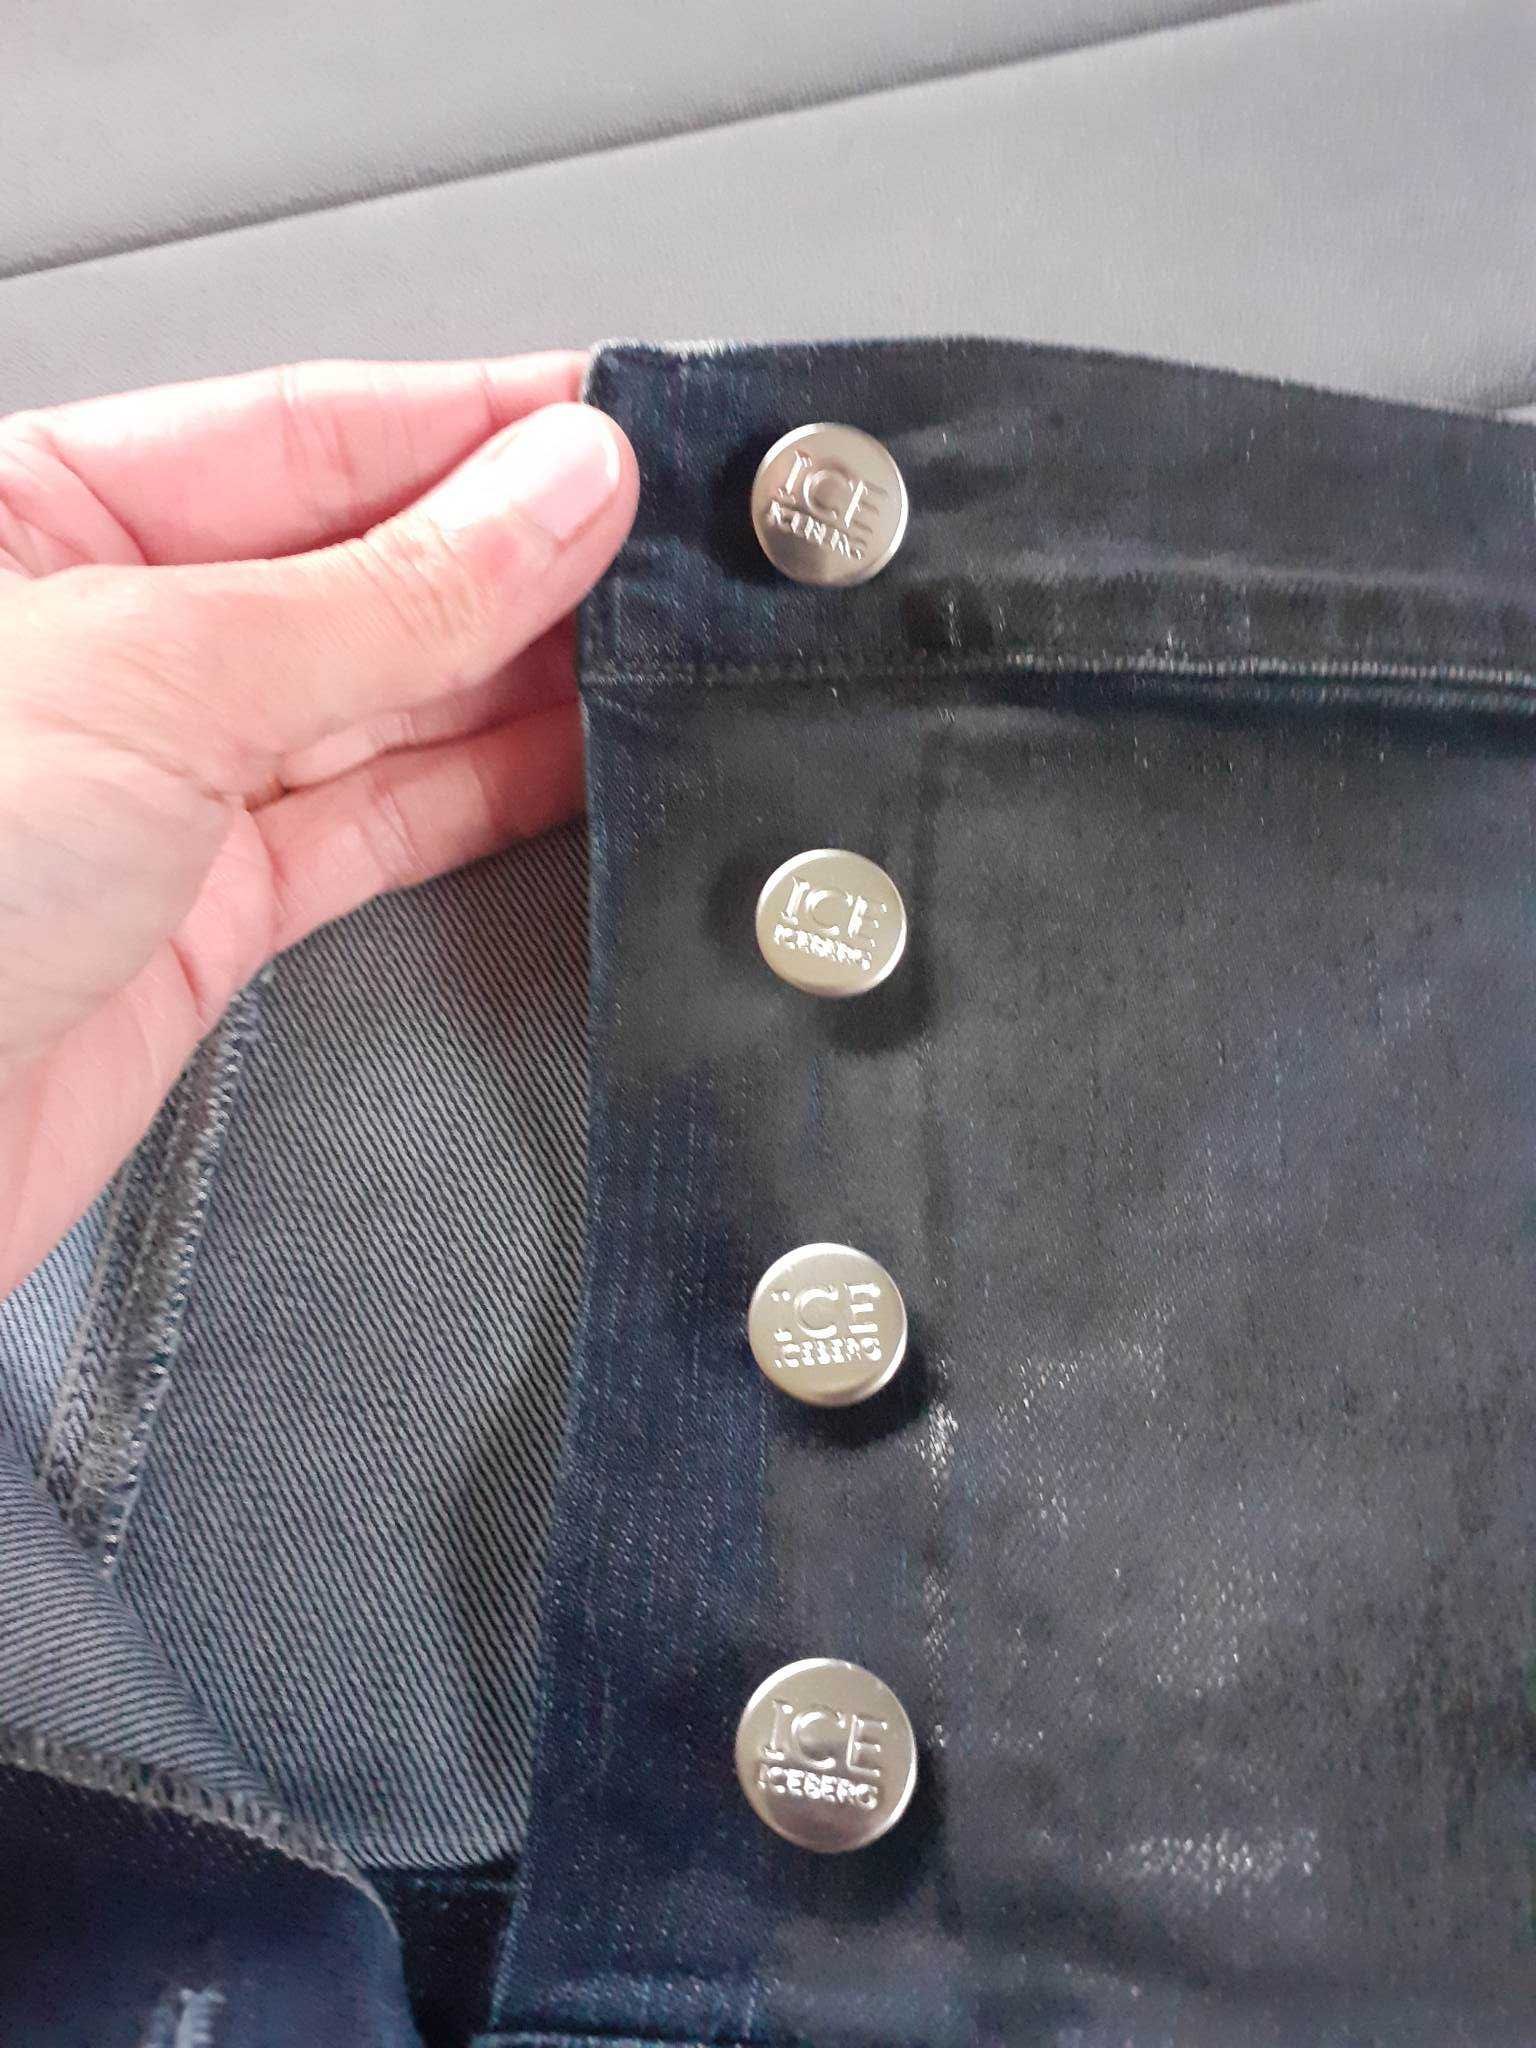 ICEBERG spódnica MINI gorsetowa jeansowa granatowa ICE Rock Style S/XS